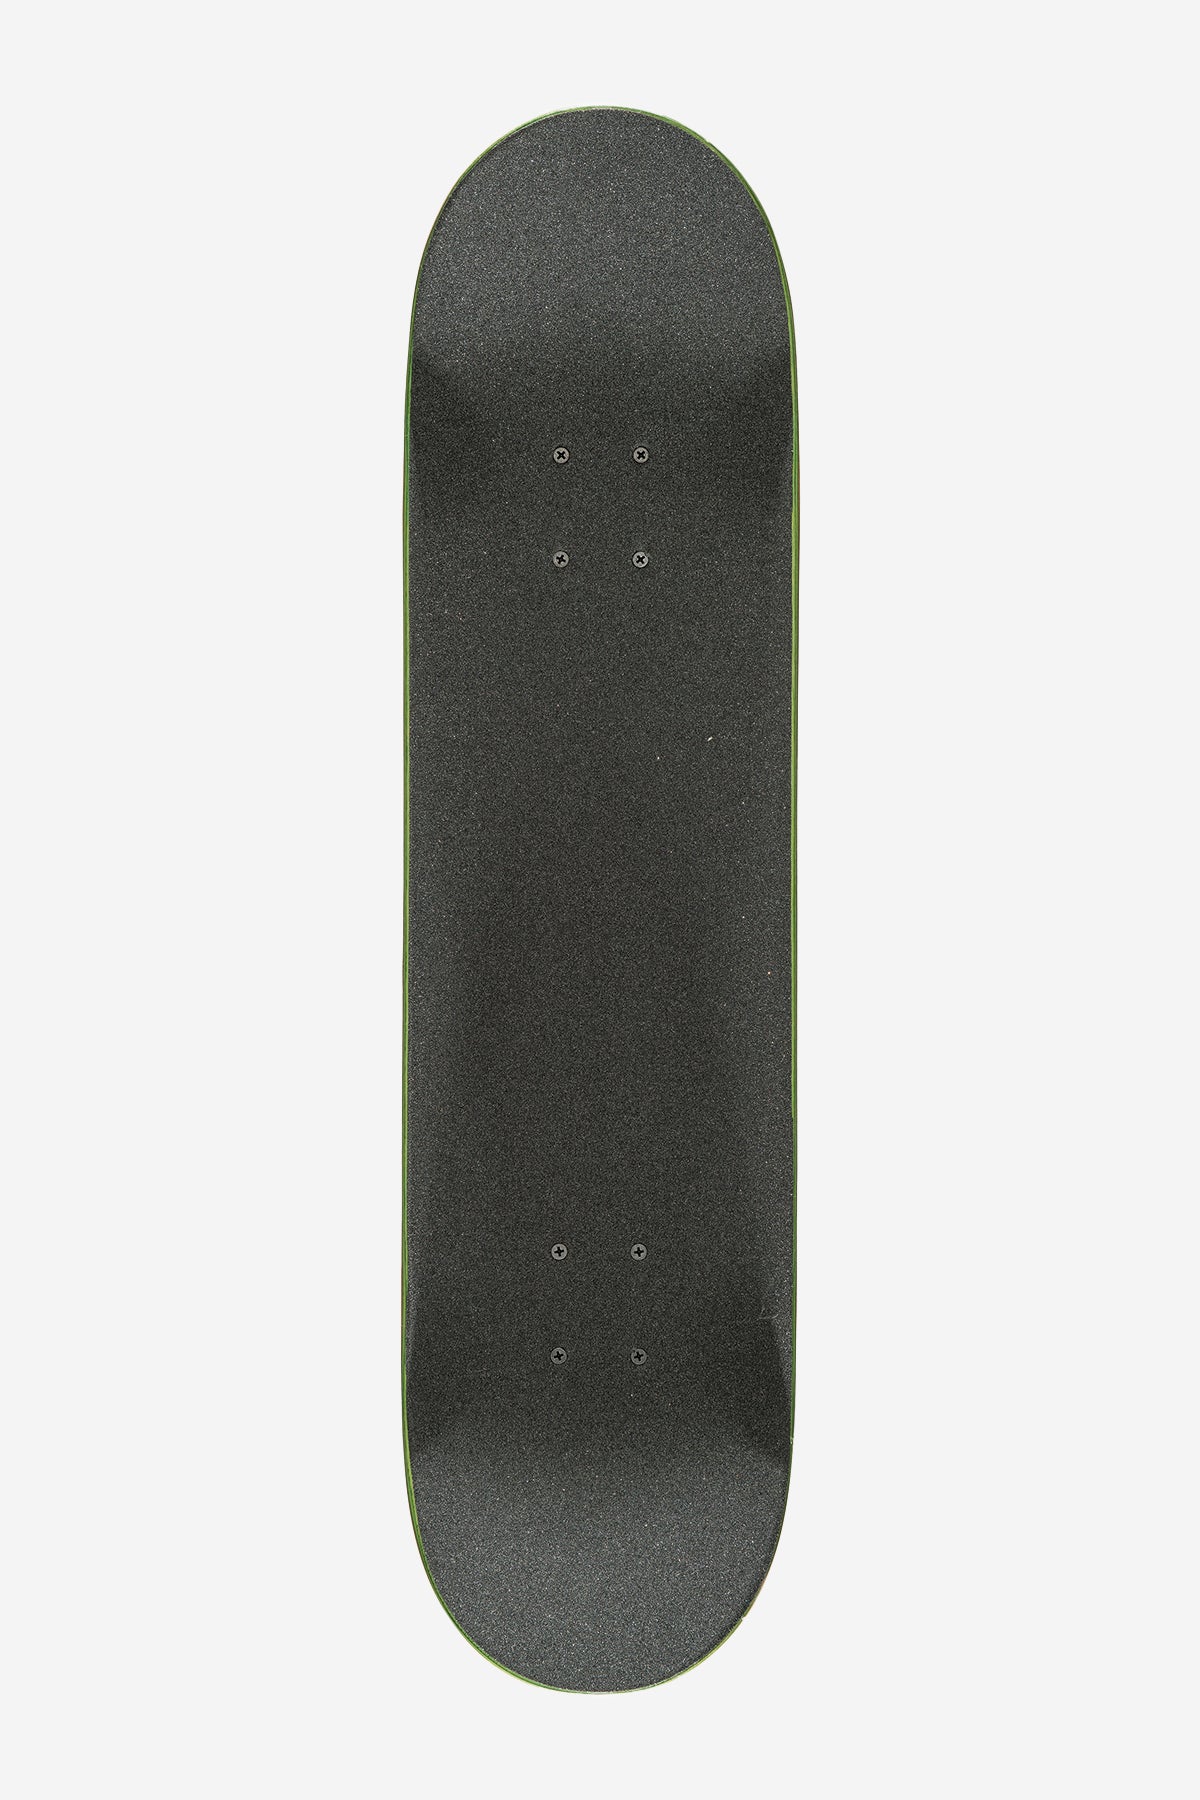 g1 palm off schwarz 8.0" komplett skateboard